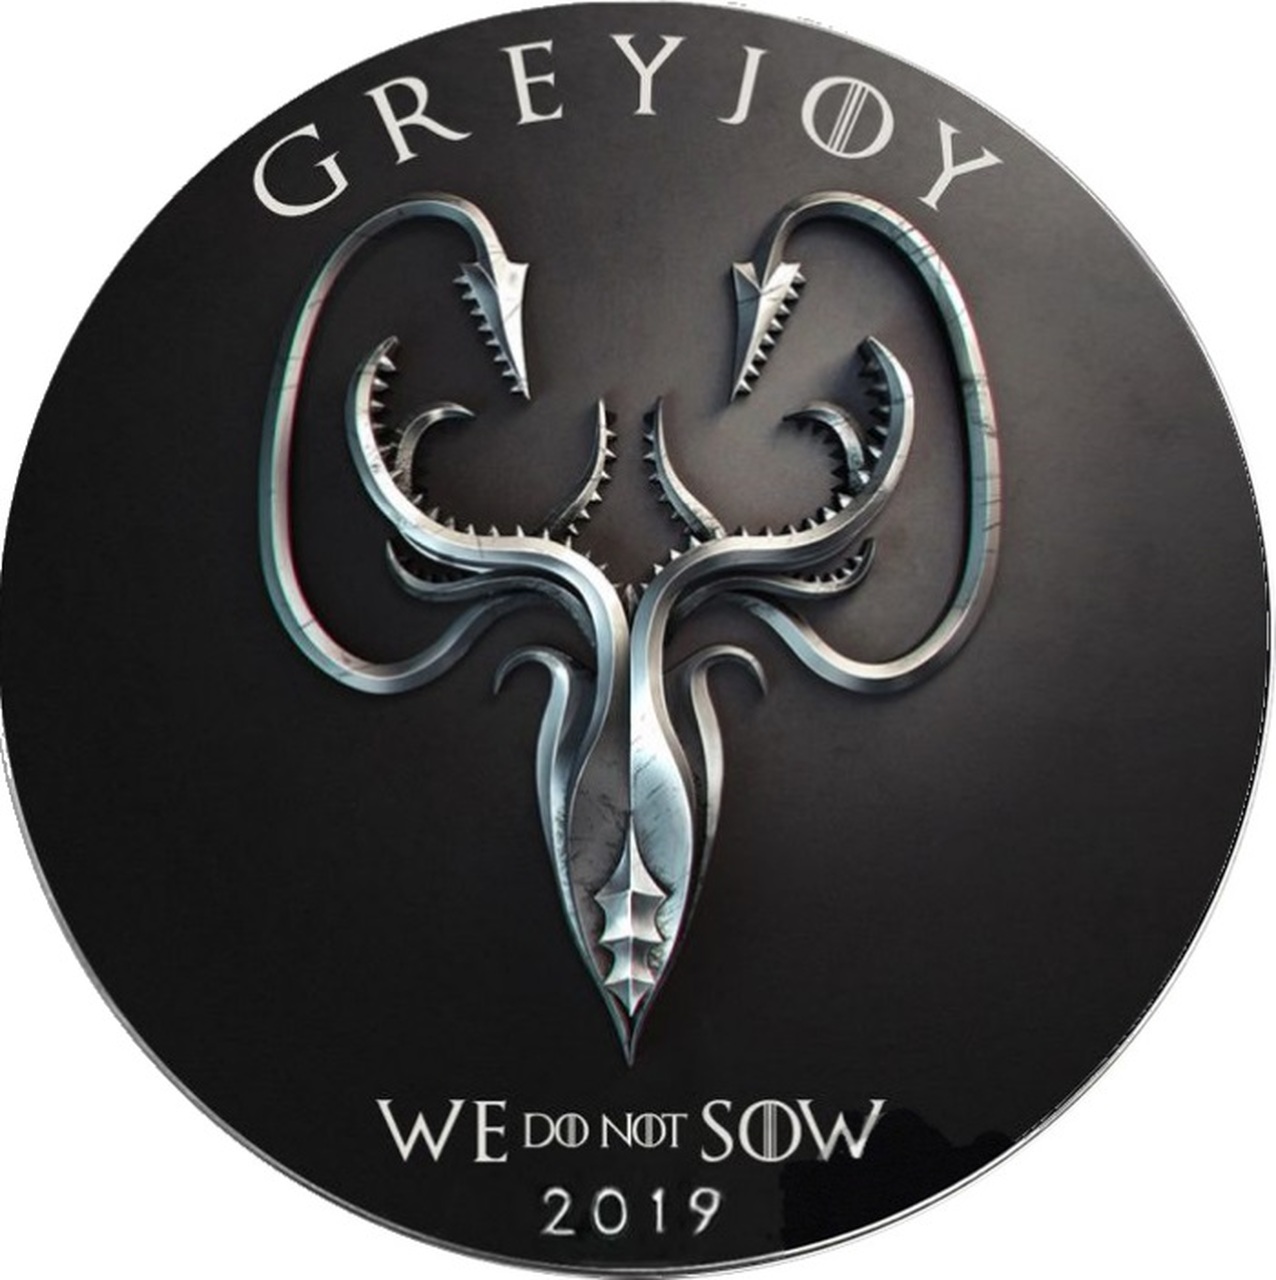 greyjoy-game-of-thrones-got_r__86773.1561057219.jpg